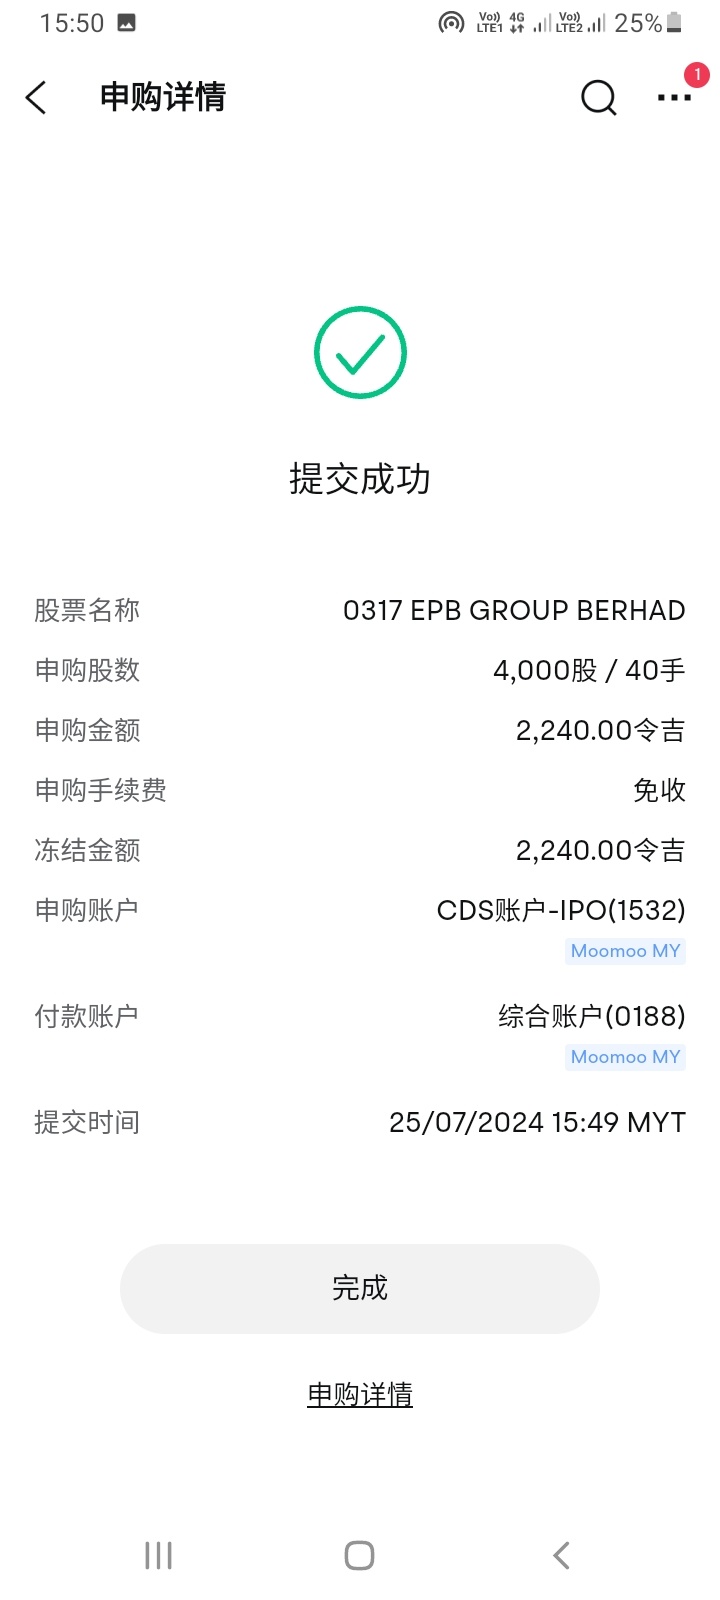 $EPB Group Berhad (0317.MY) $